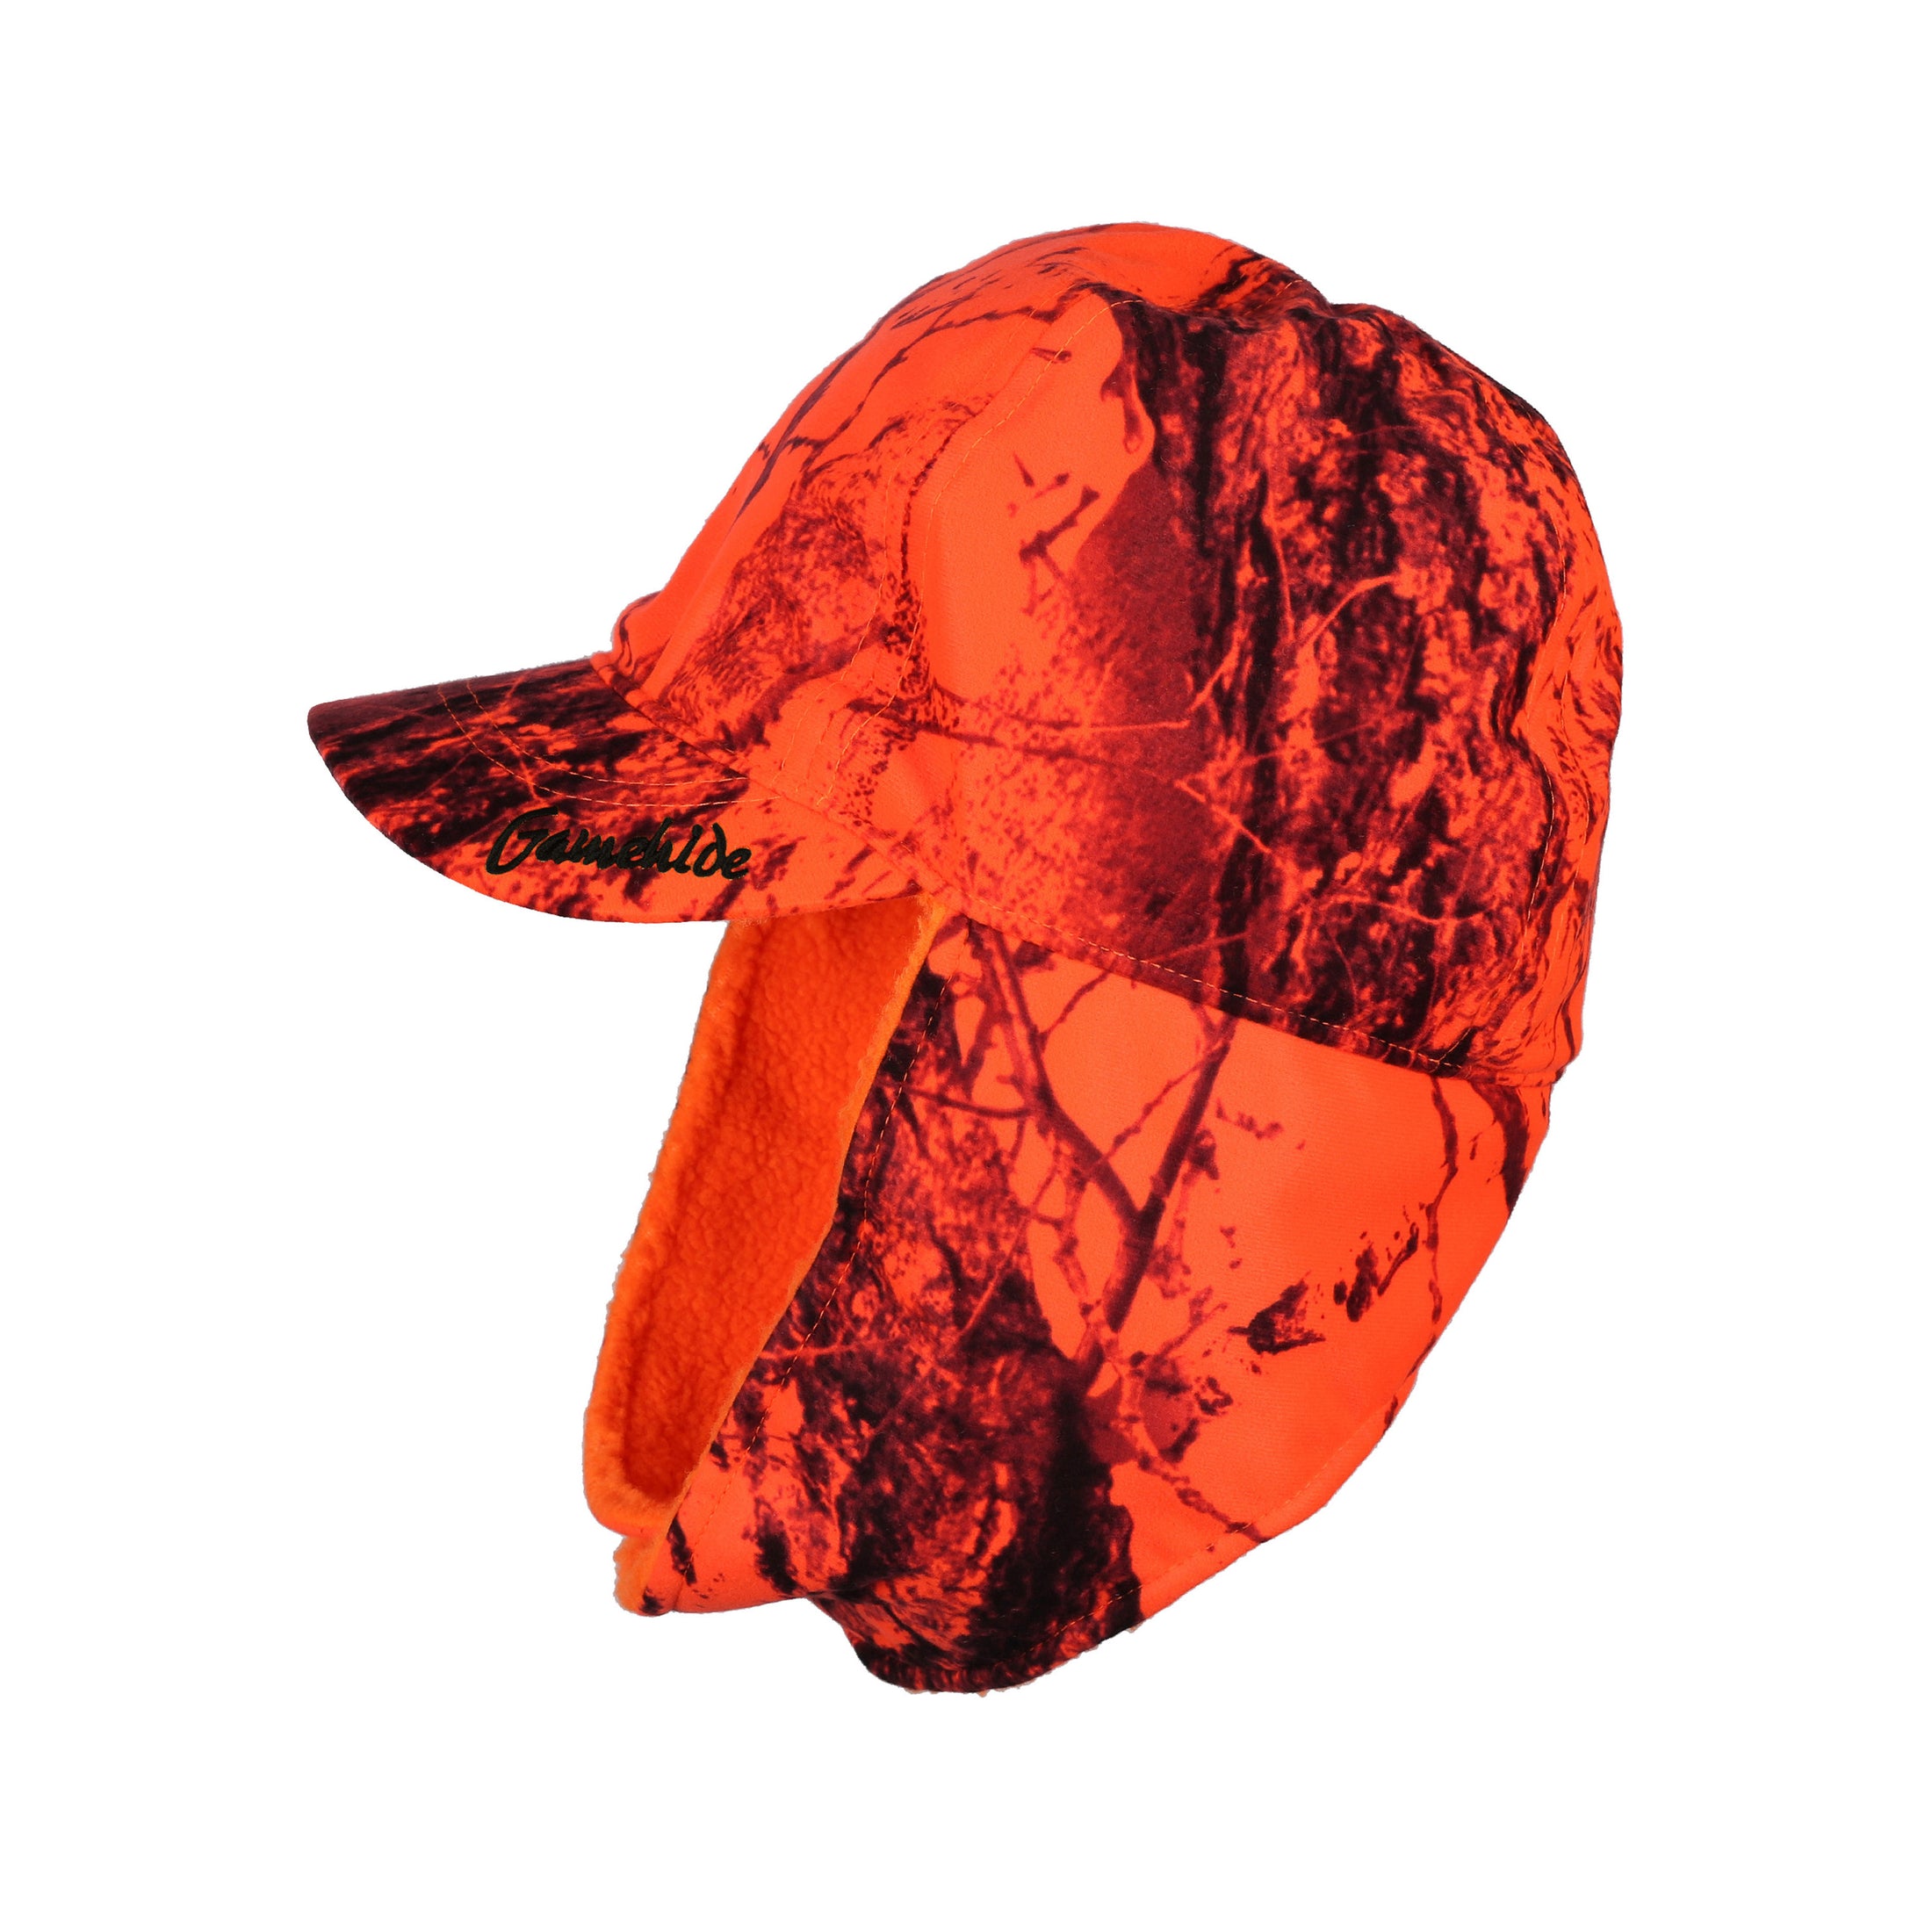 gamehide trophy hat (naked north blaze orange camo)